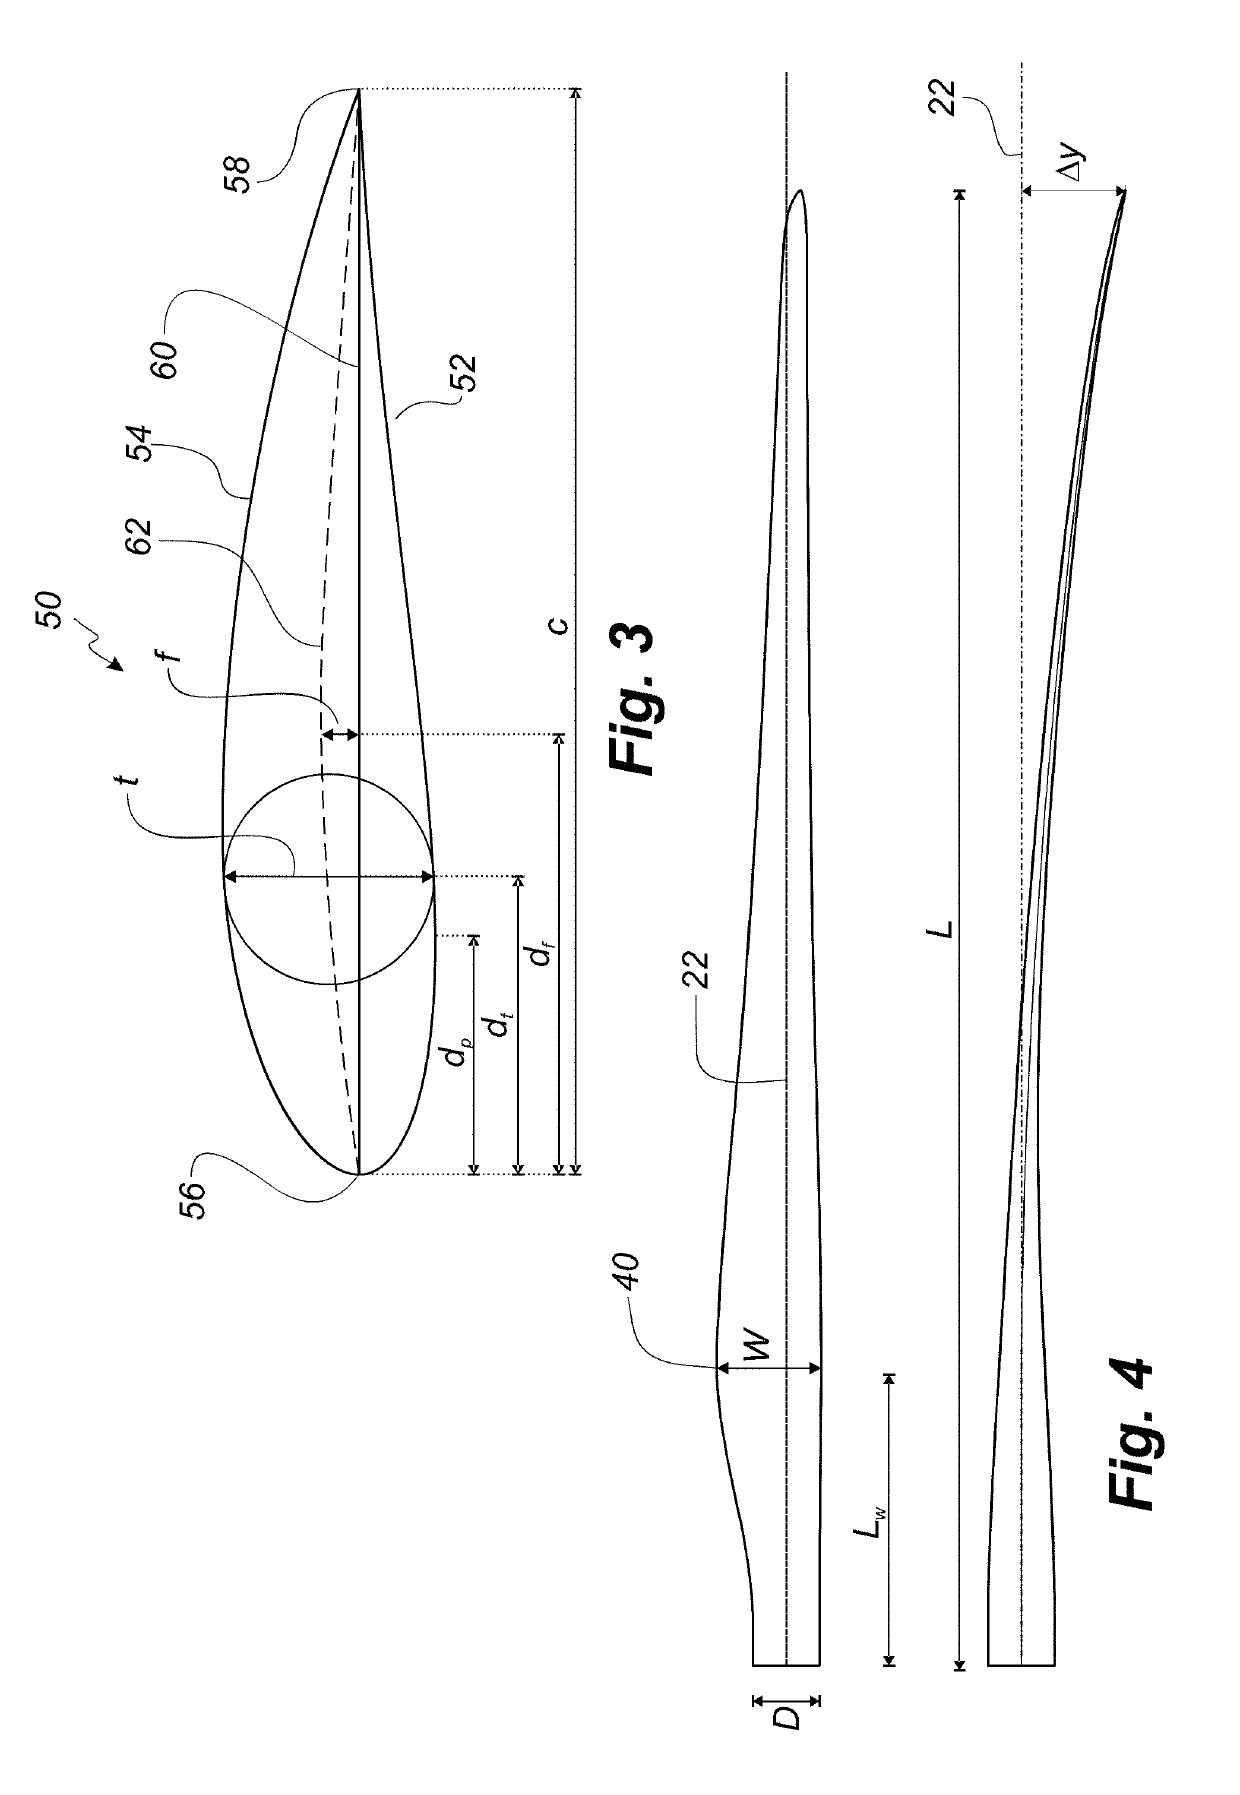 Modular system for transporting wind turbine blades